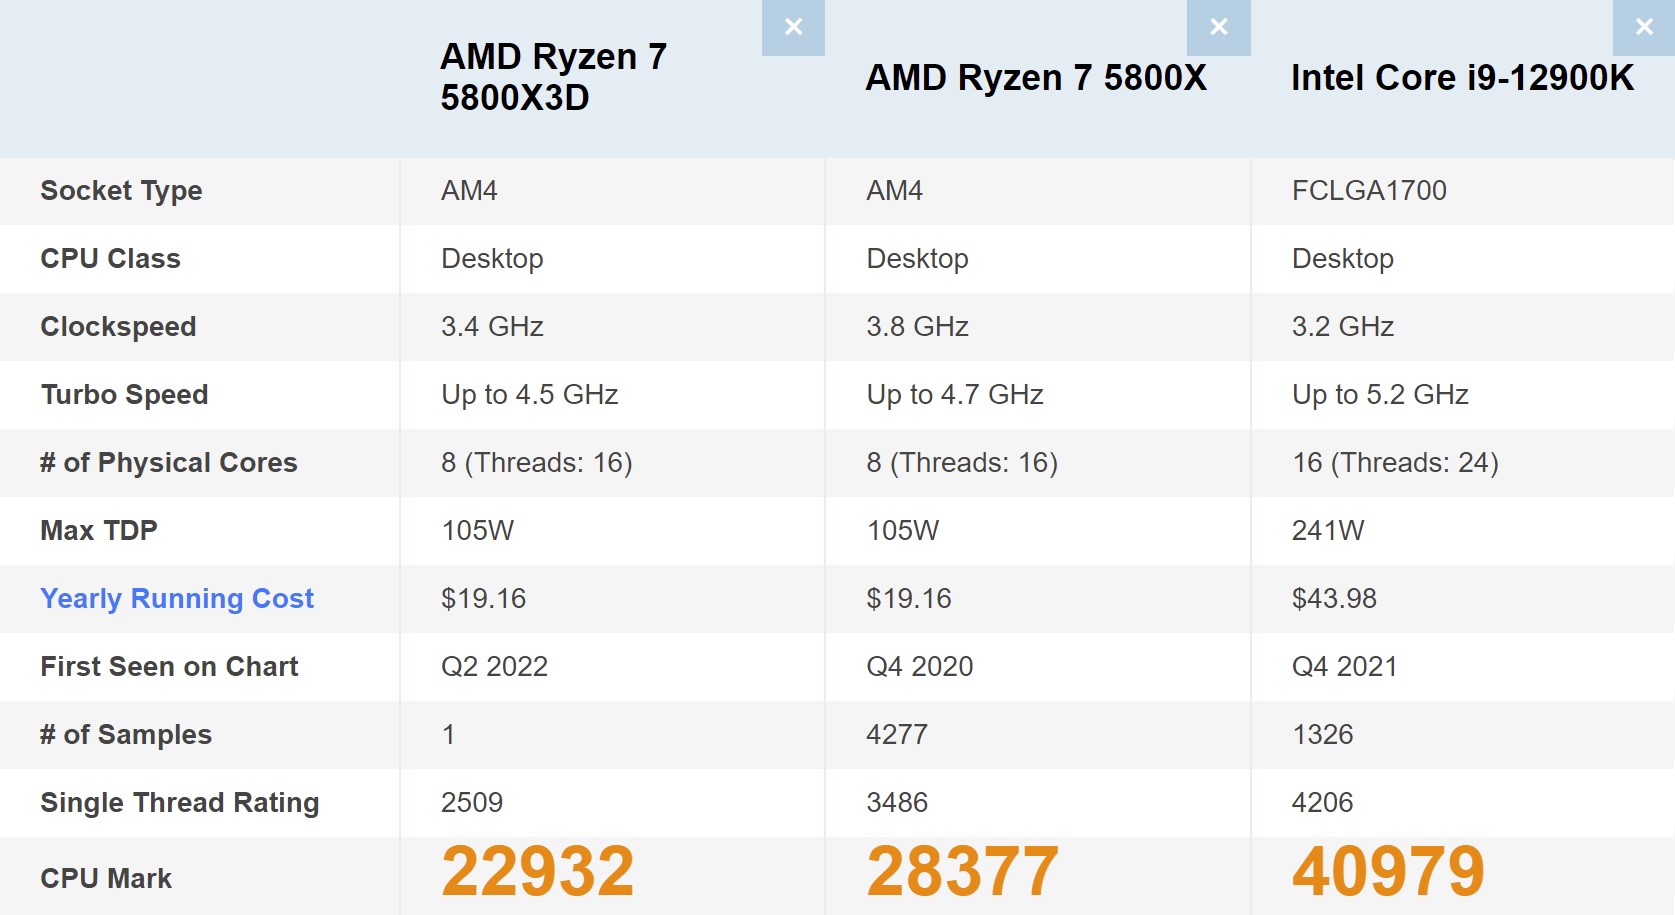 AMD Ryzen 7 5800X3D 8-core 16-thread Desktop Processor